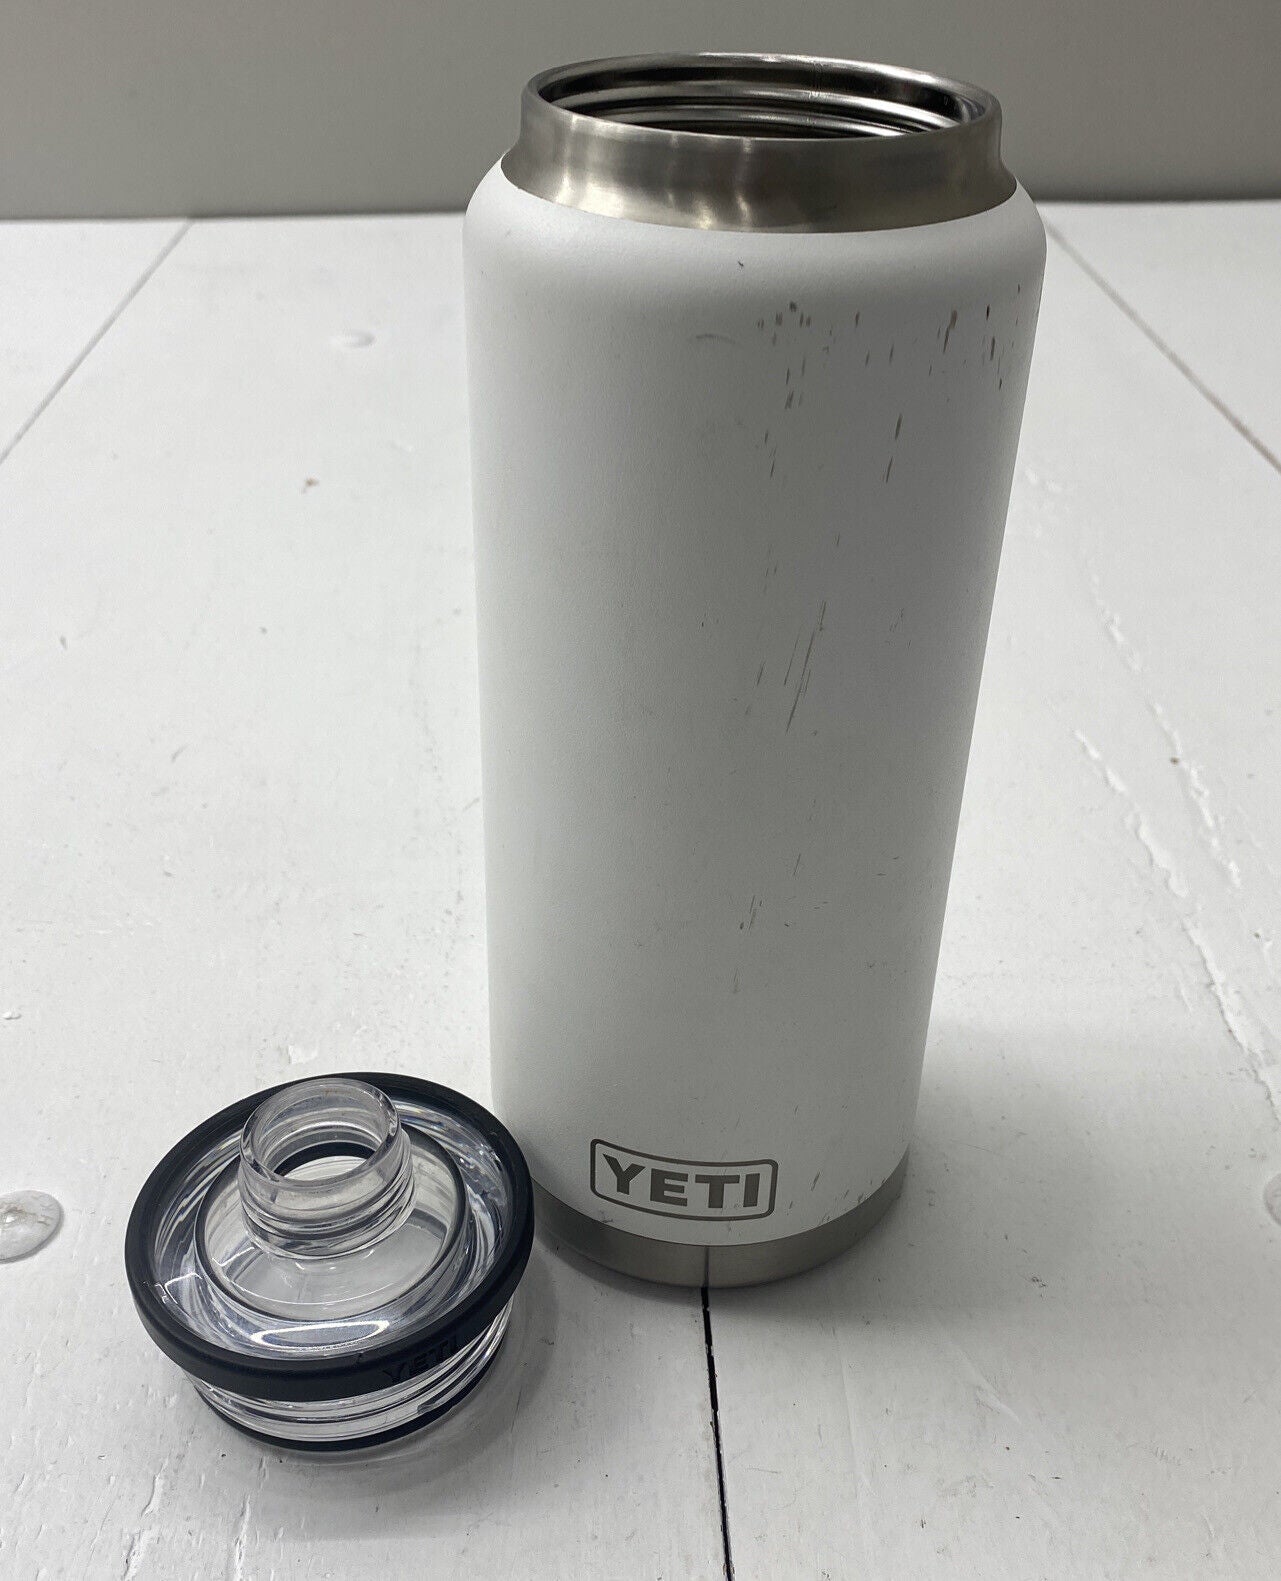 Yeti - 36 oz Rambler Bottle with Chug Cap White